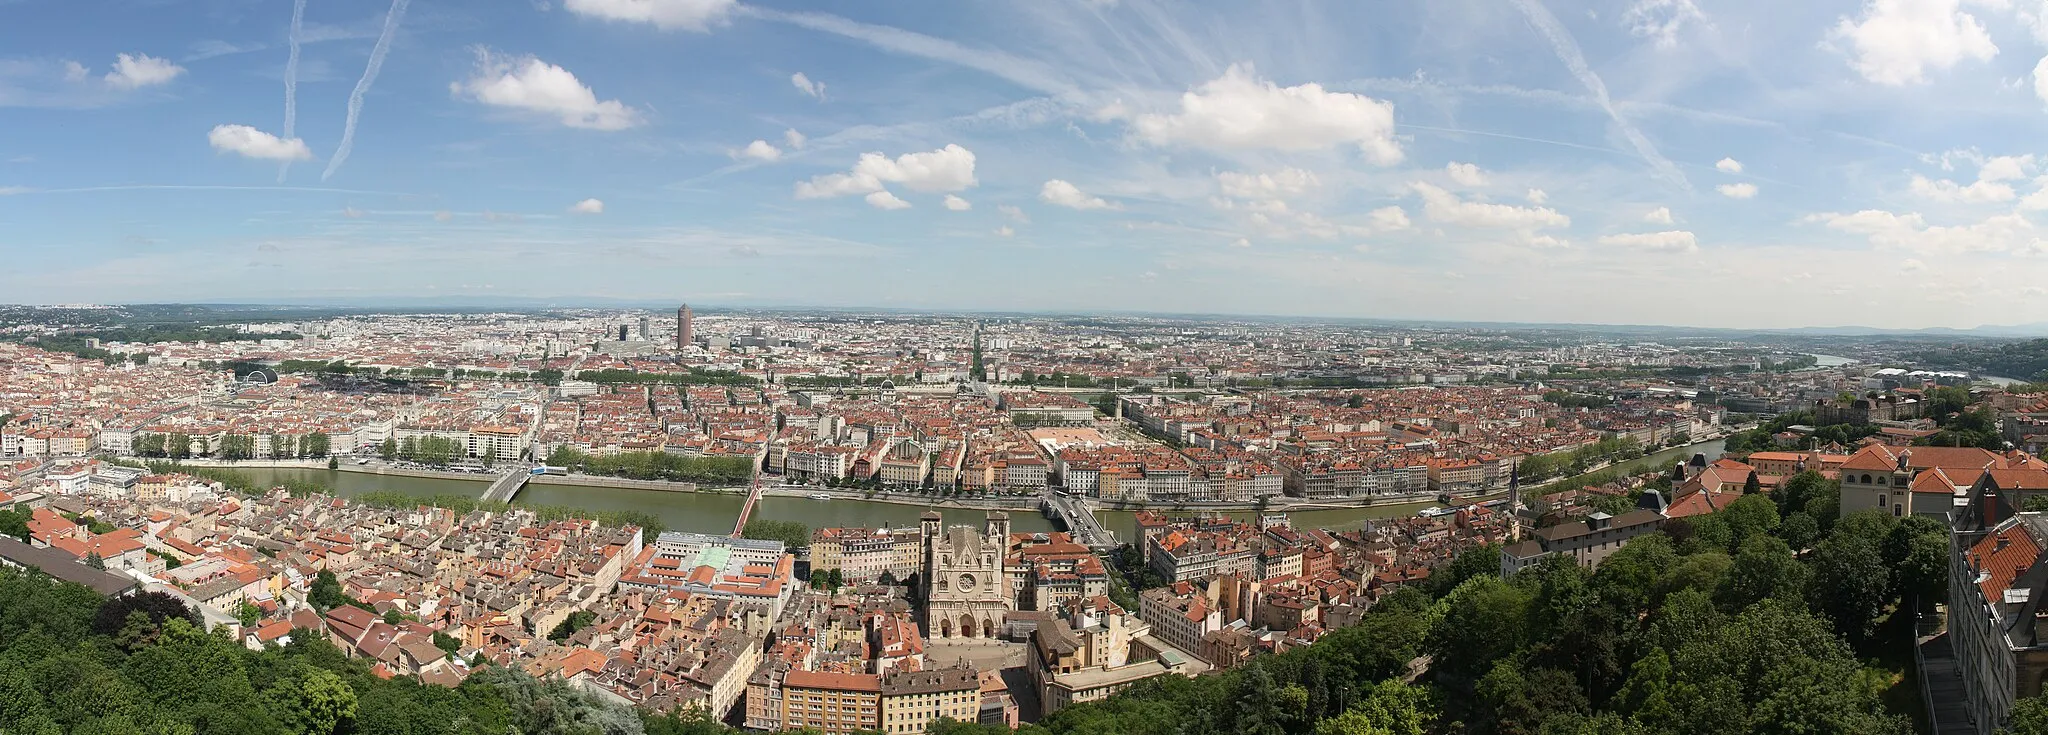 Image of Lyon